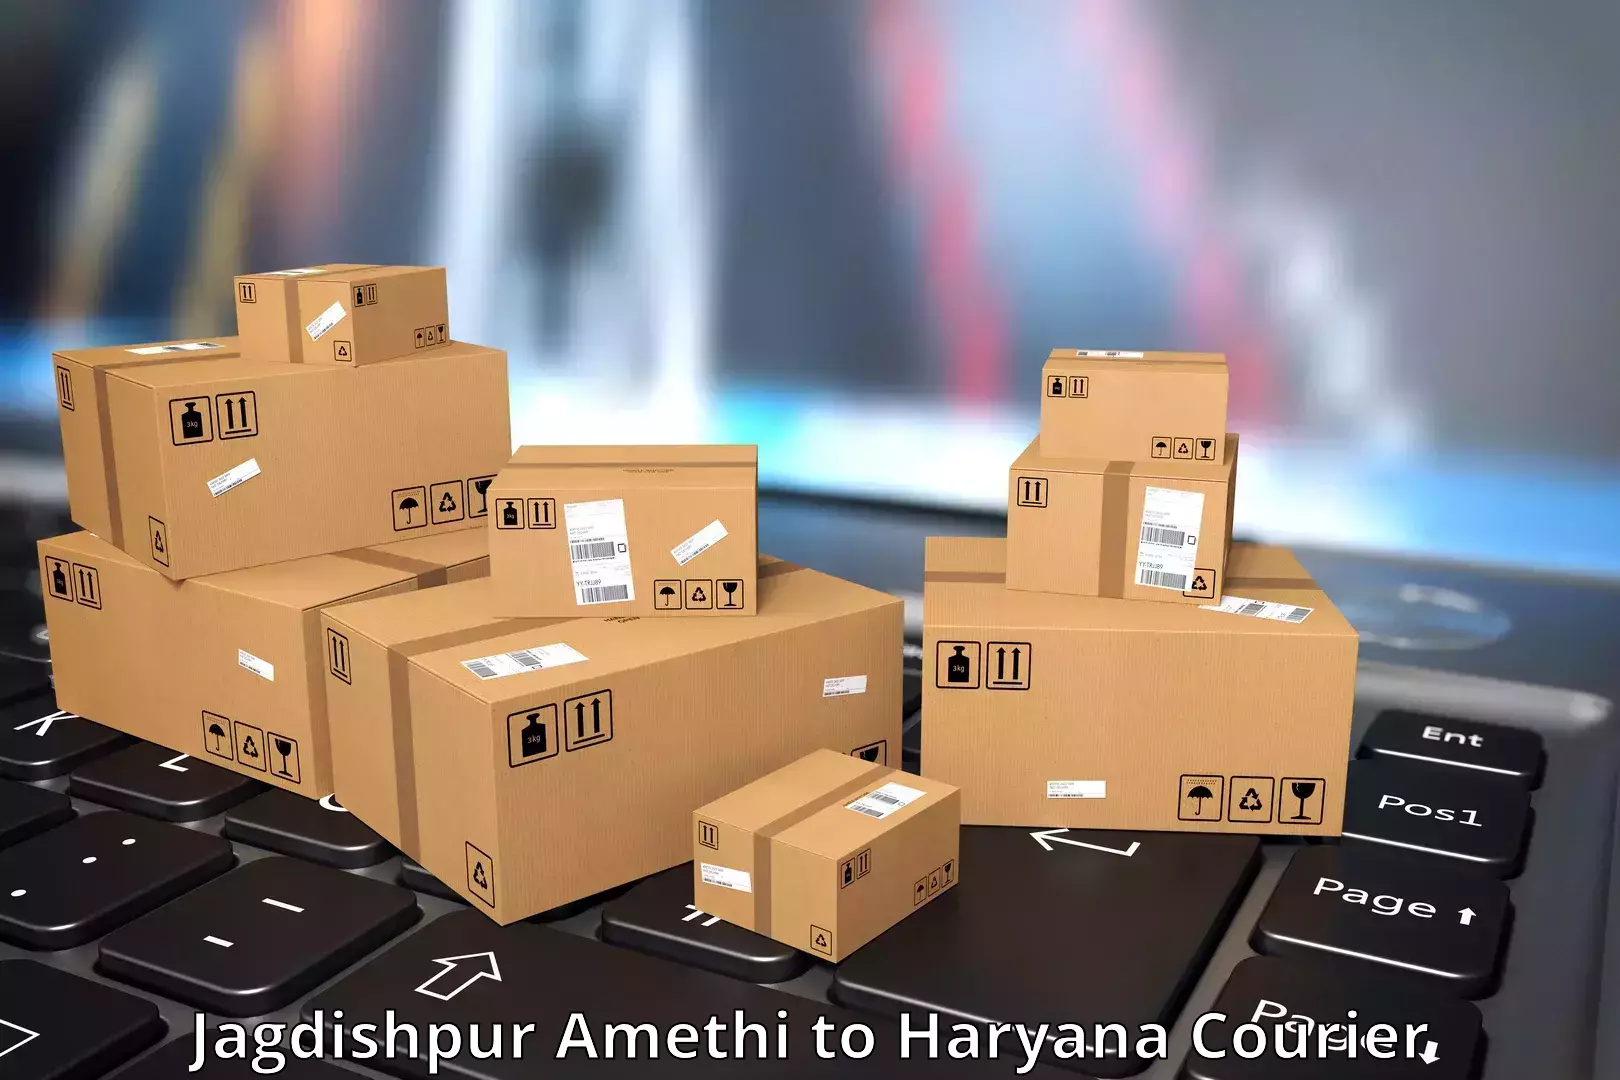 Versatile courier offerings Jagdishpur Amethi to Dharuhera